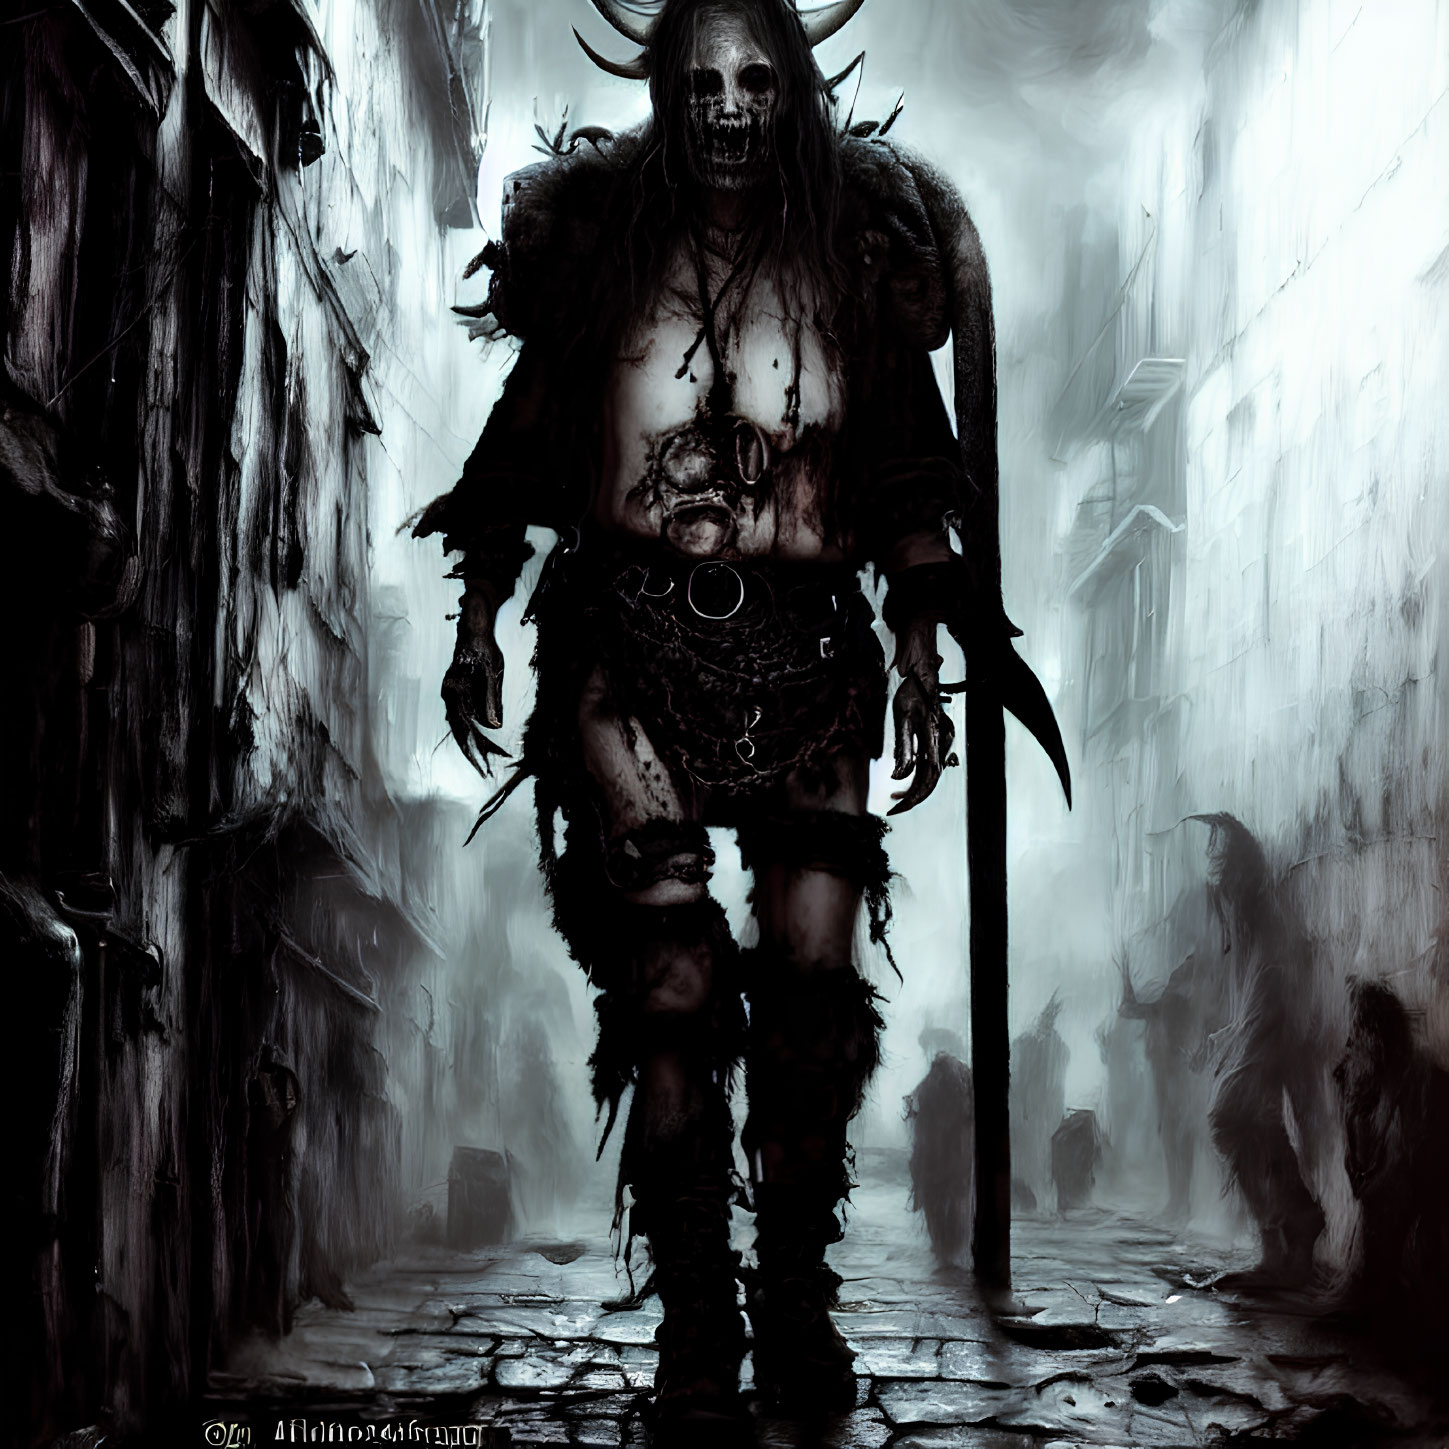 Sinister fantasy figure with horns in dark alleyway